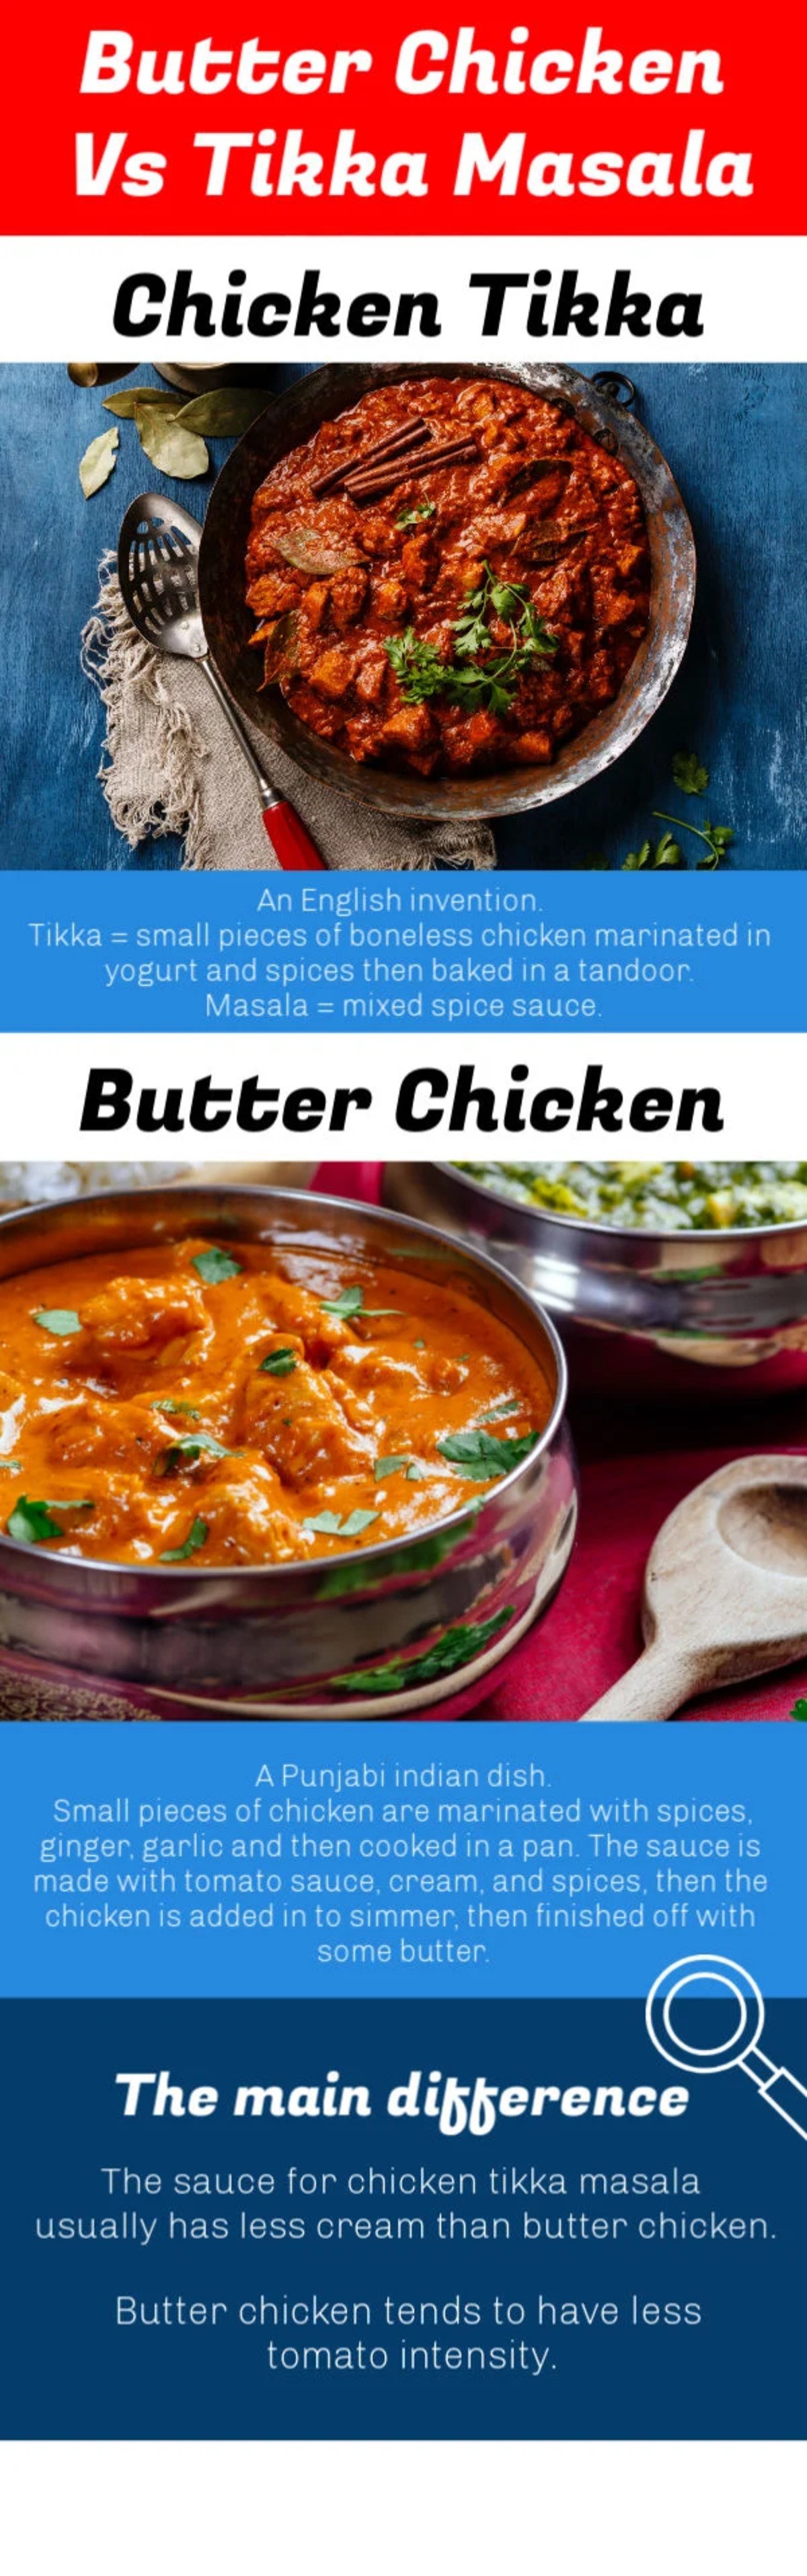 Butter chicken vs chicken tikkka masala infographic